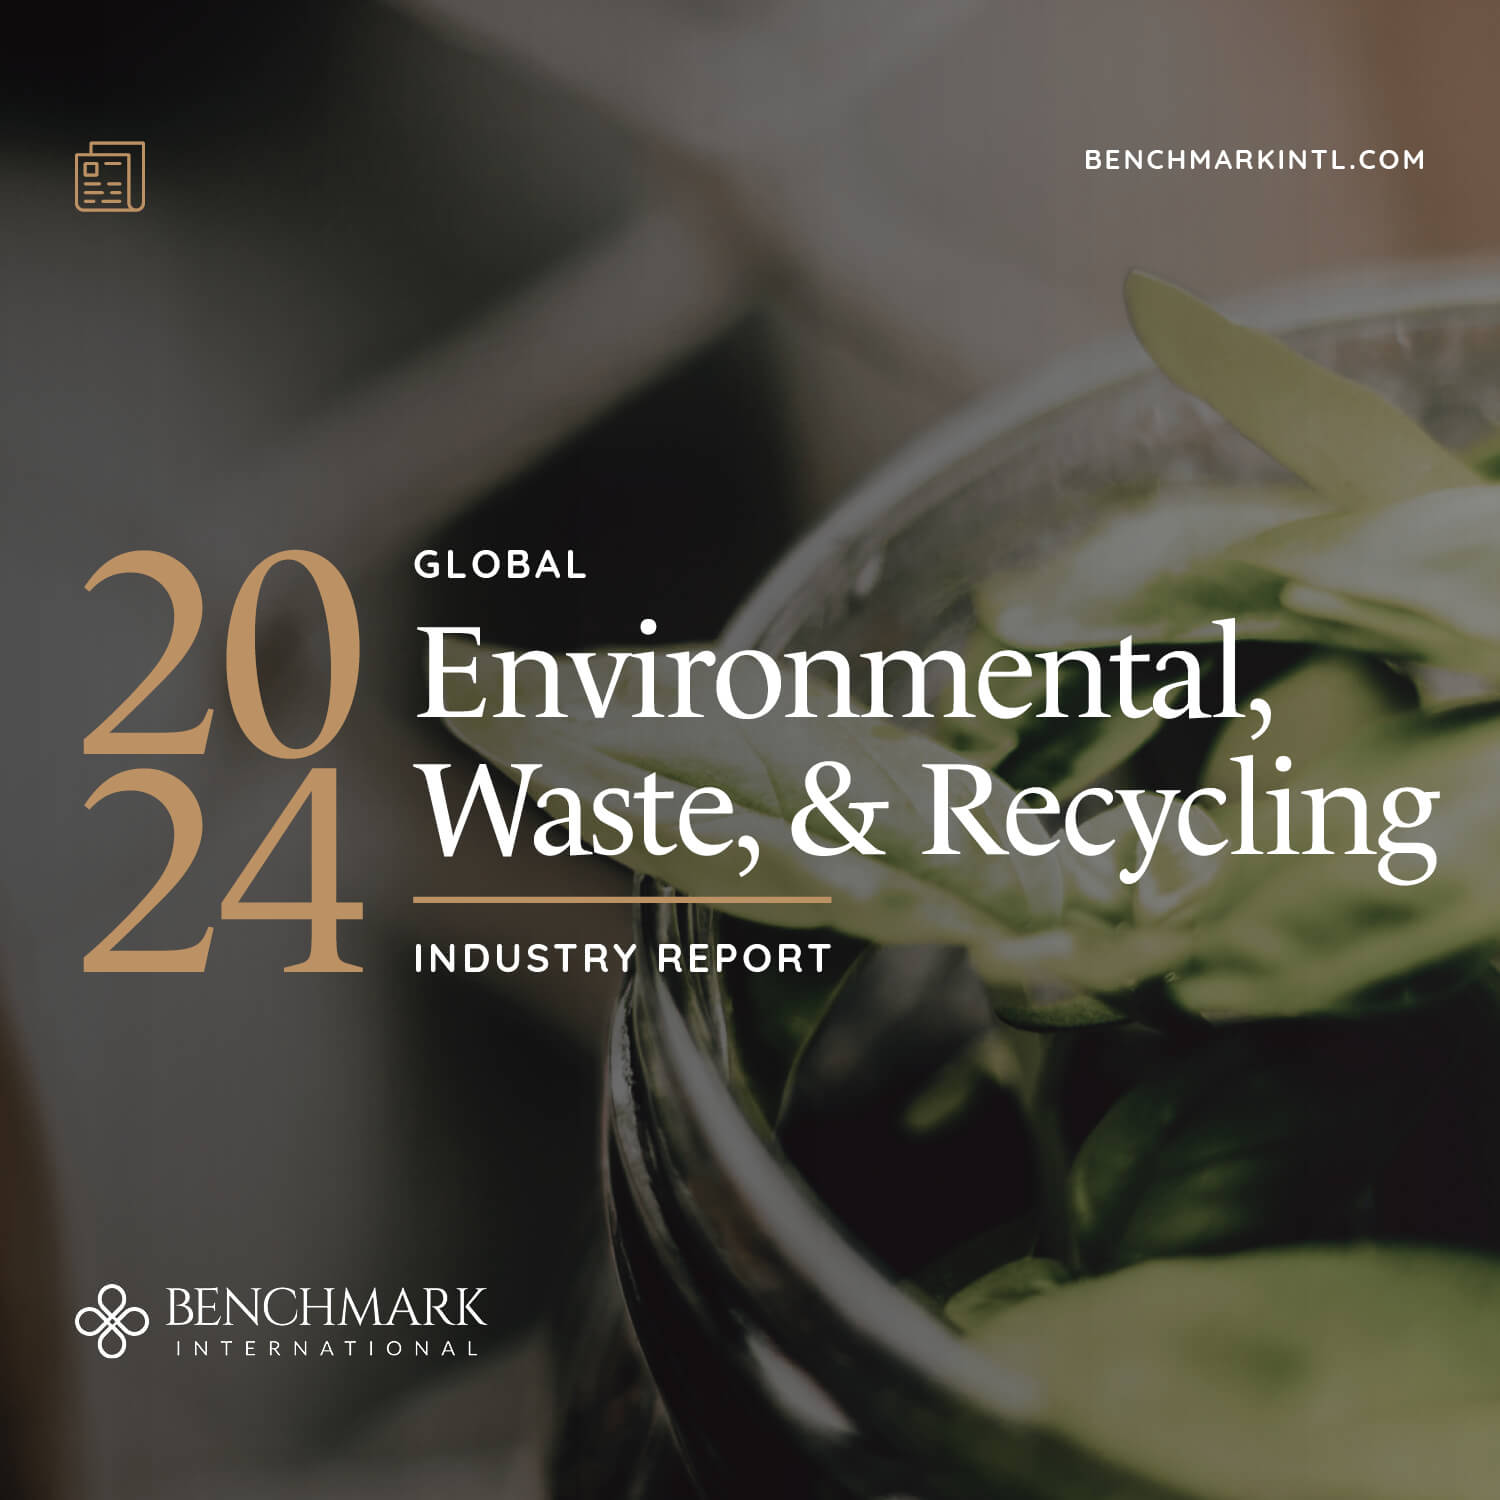 MRKTG_Social_Blog_Mobile_Industry_Report_Environmental_Waste_&_Recycling